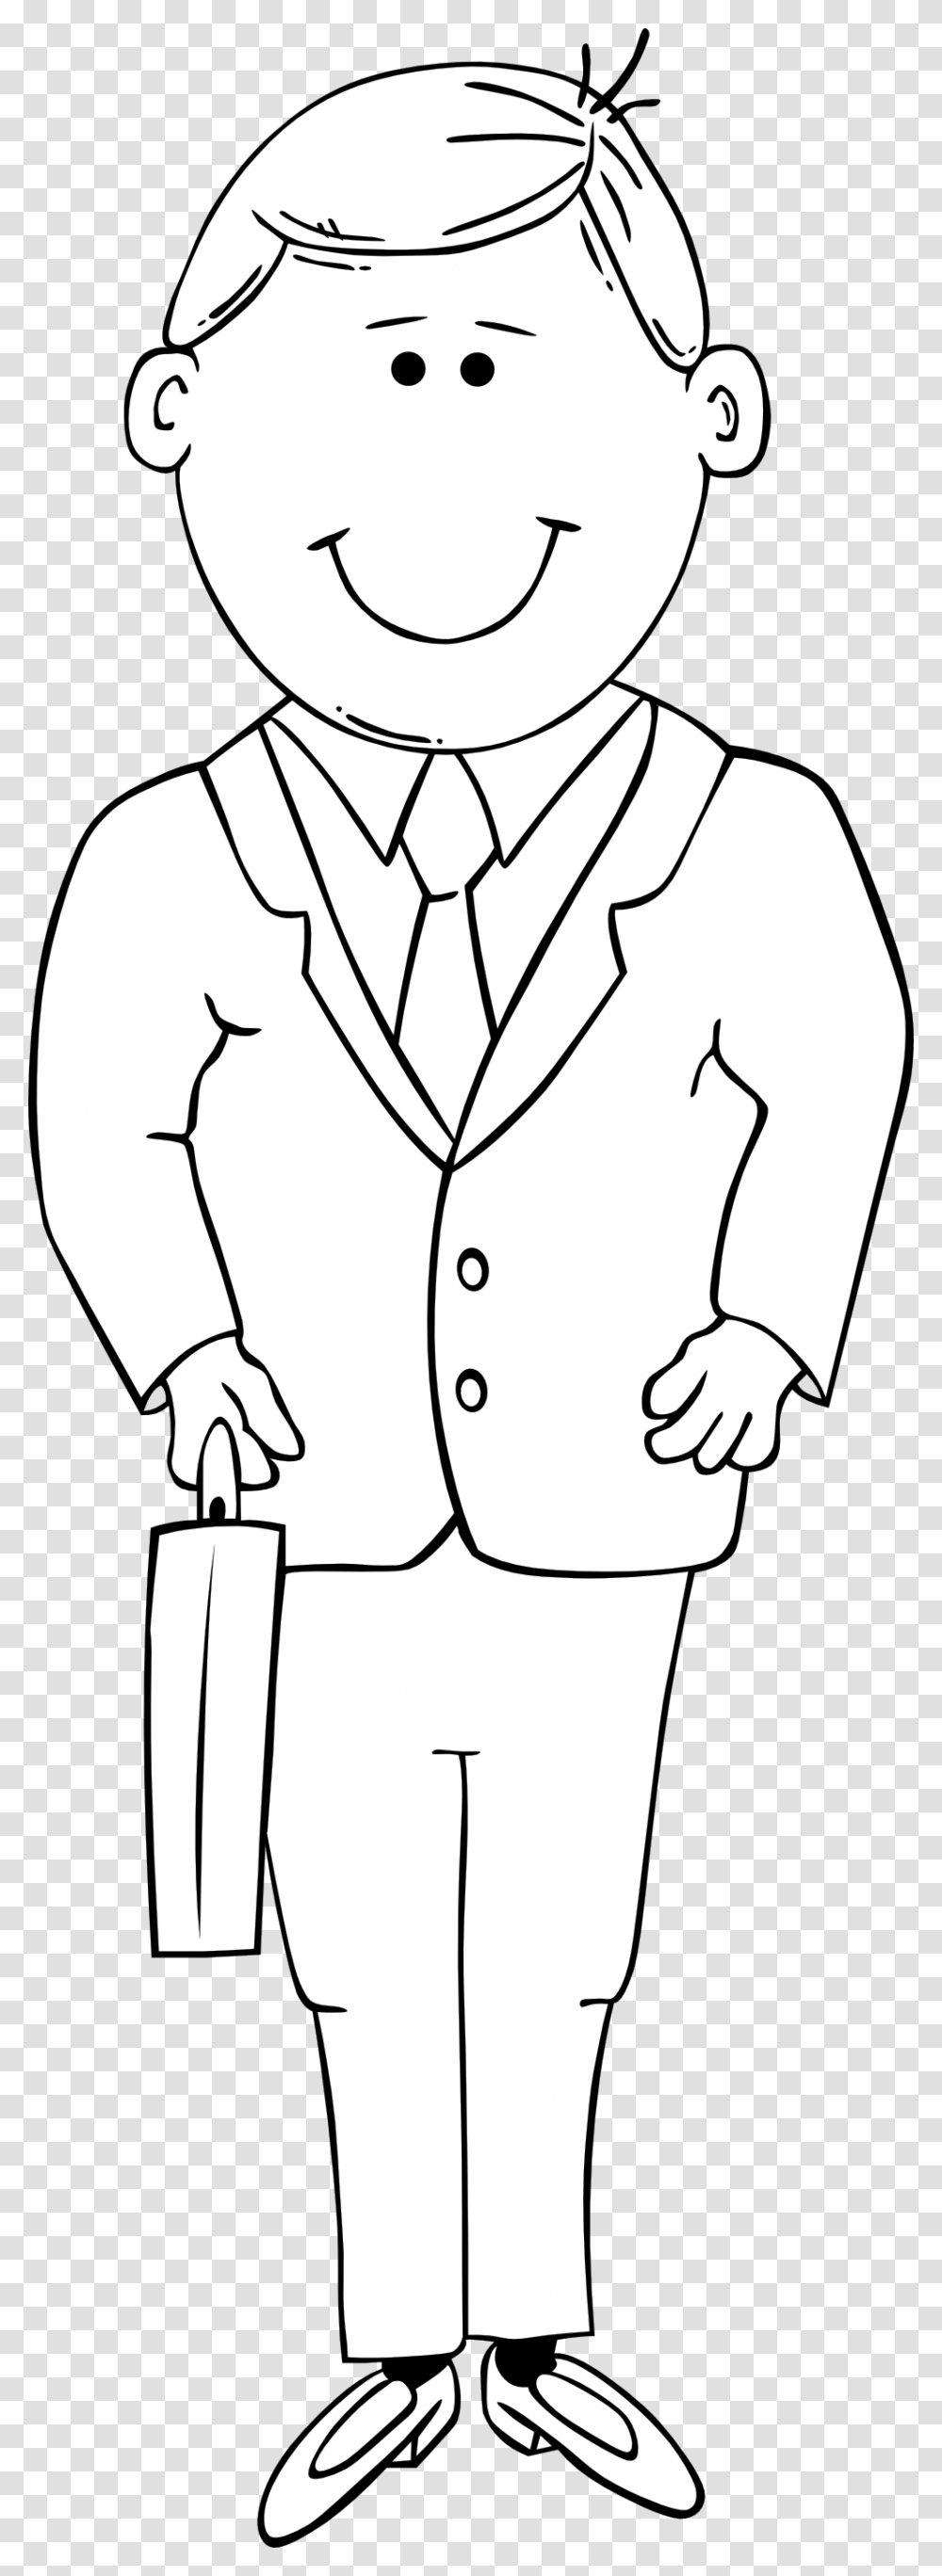 Collection Of Man Man In Suit Cartoon, Apparel, Blazer, Jacket Transparent Png